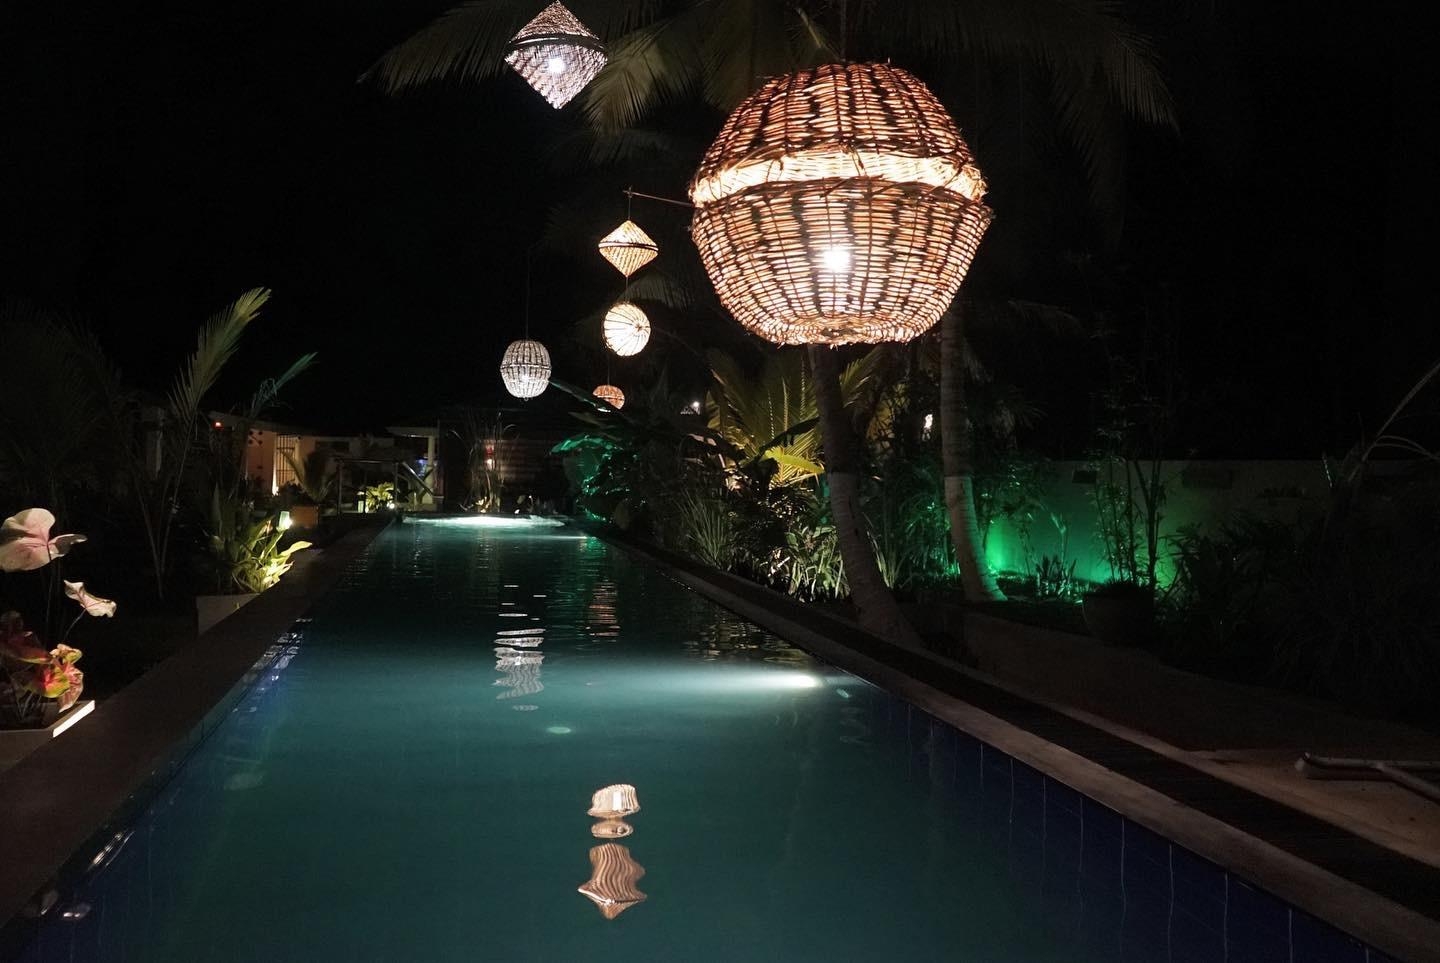 #diy pooldesign in srilanka by designdesilva @redcoconut_villa boutique Hotel im Aufbau in Eigenregie  